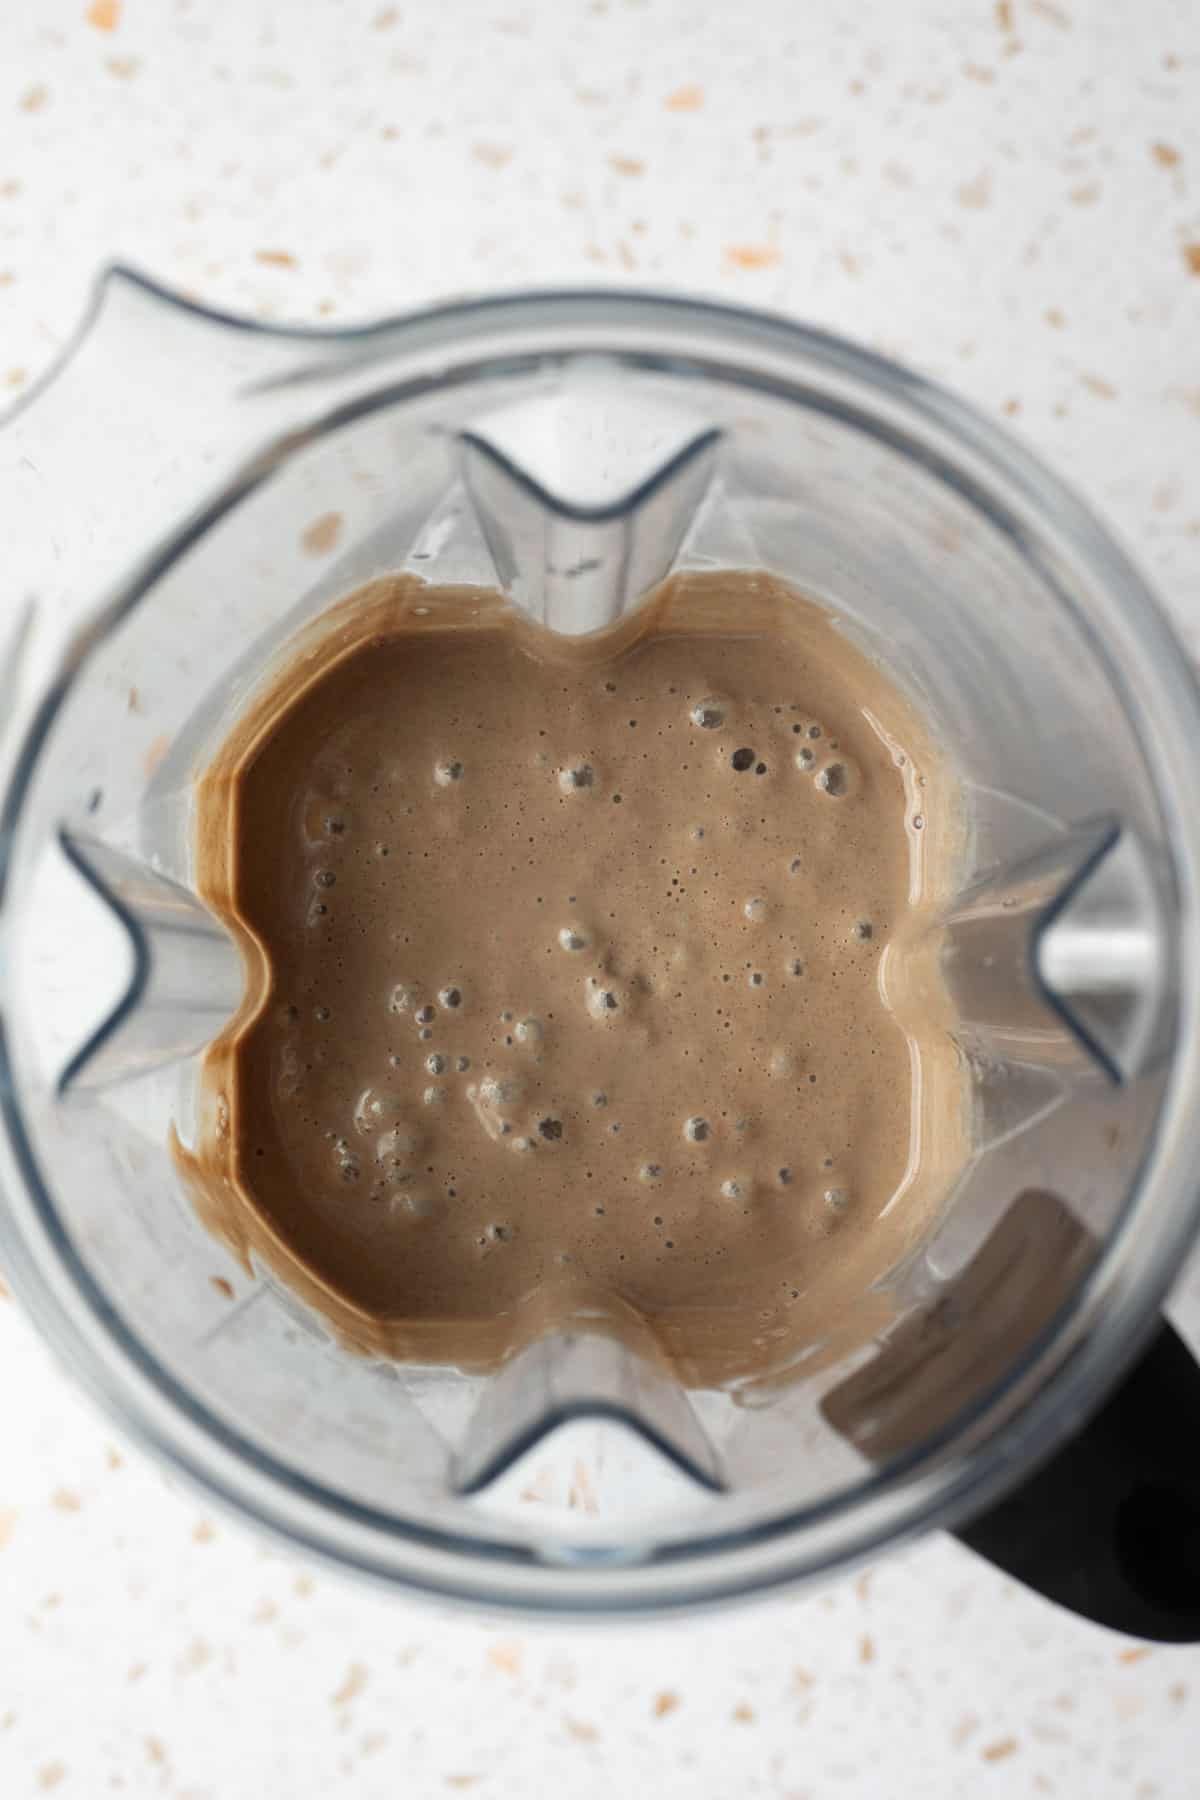 Looking inside the blender jar after blending the date ice cream base.